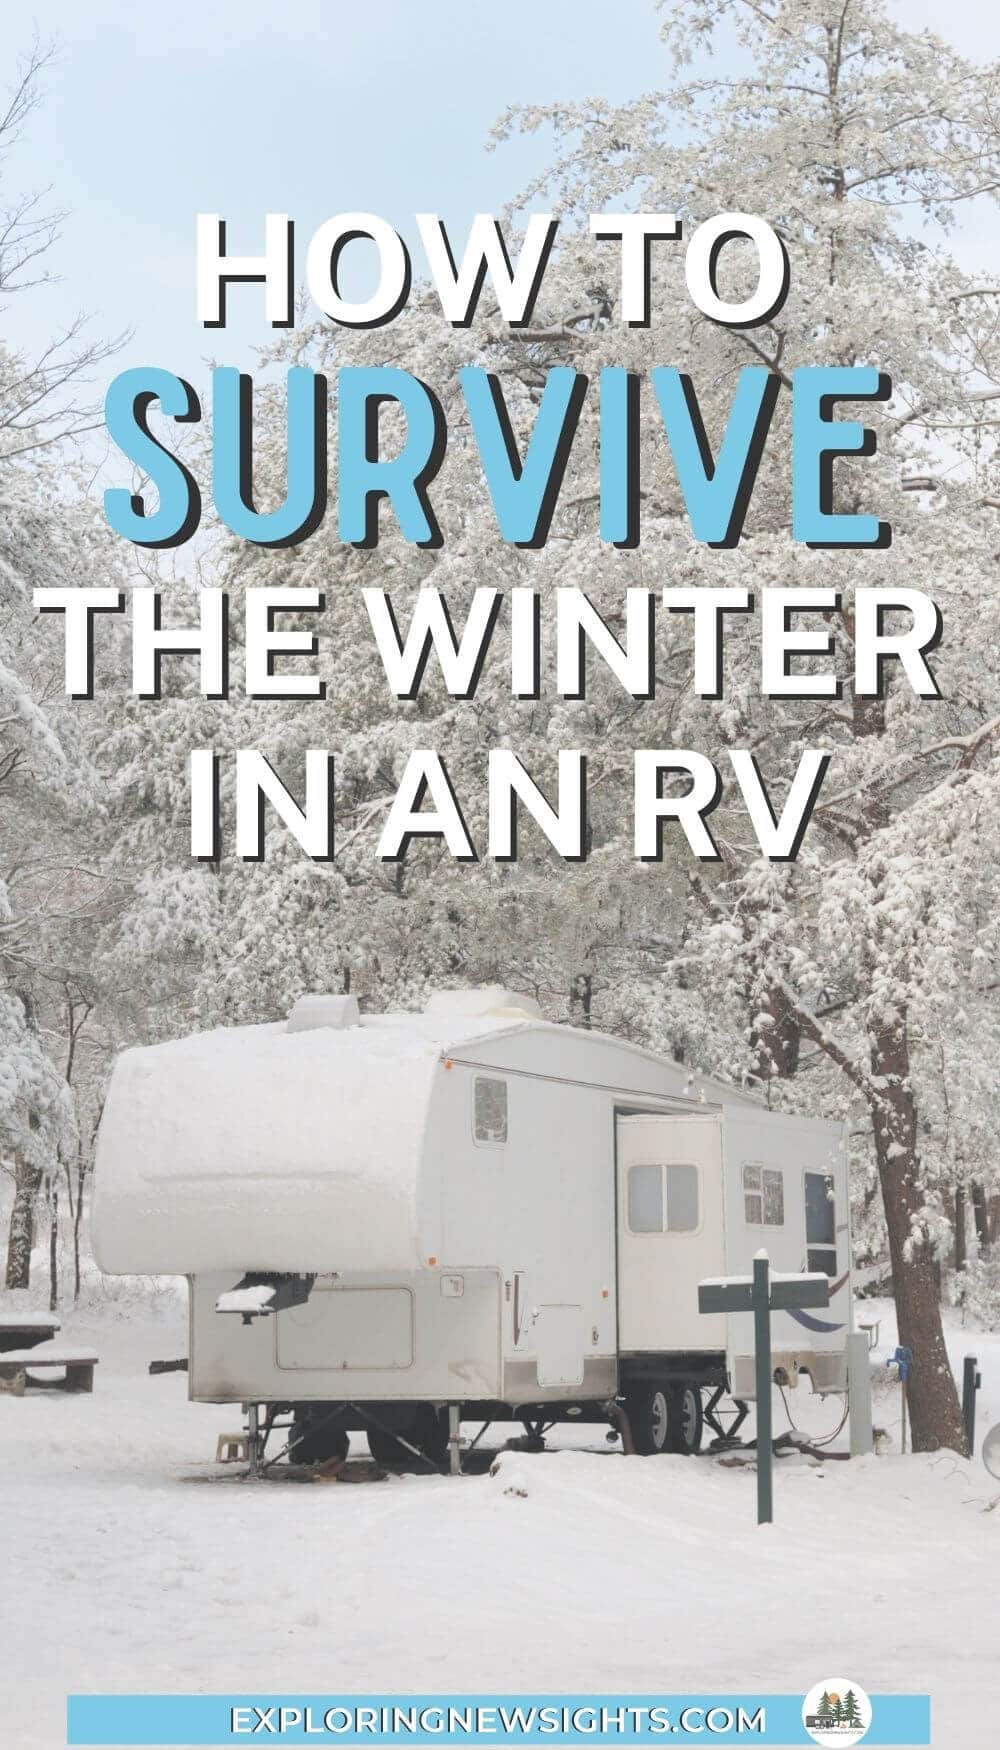 Winter RV Living fulltime (1)